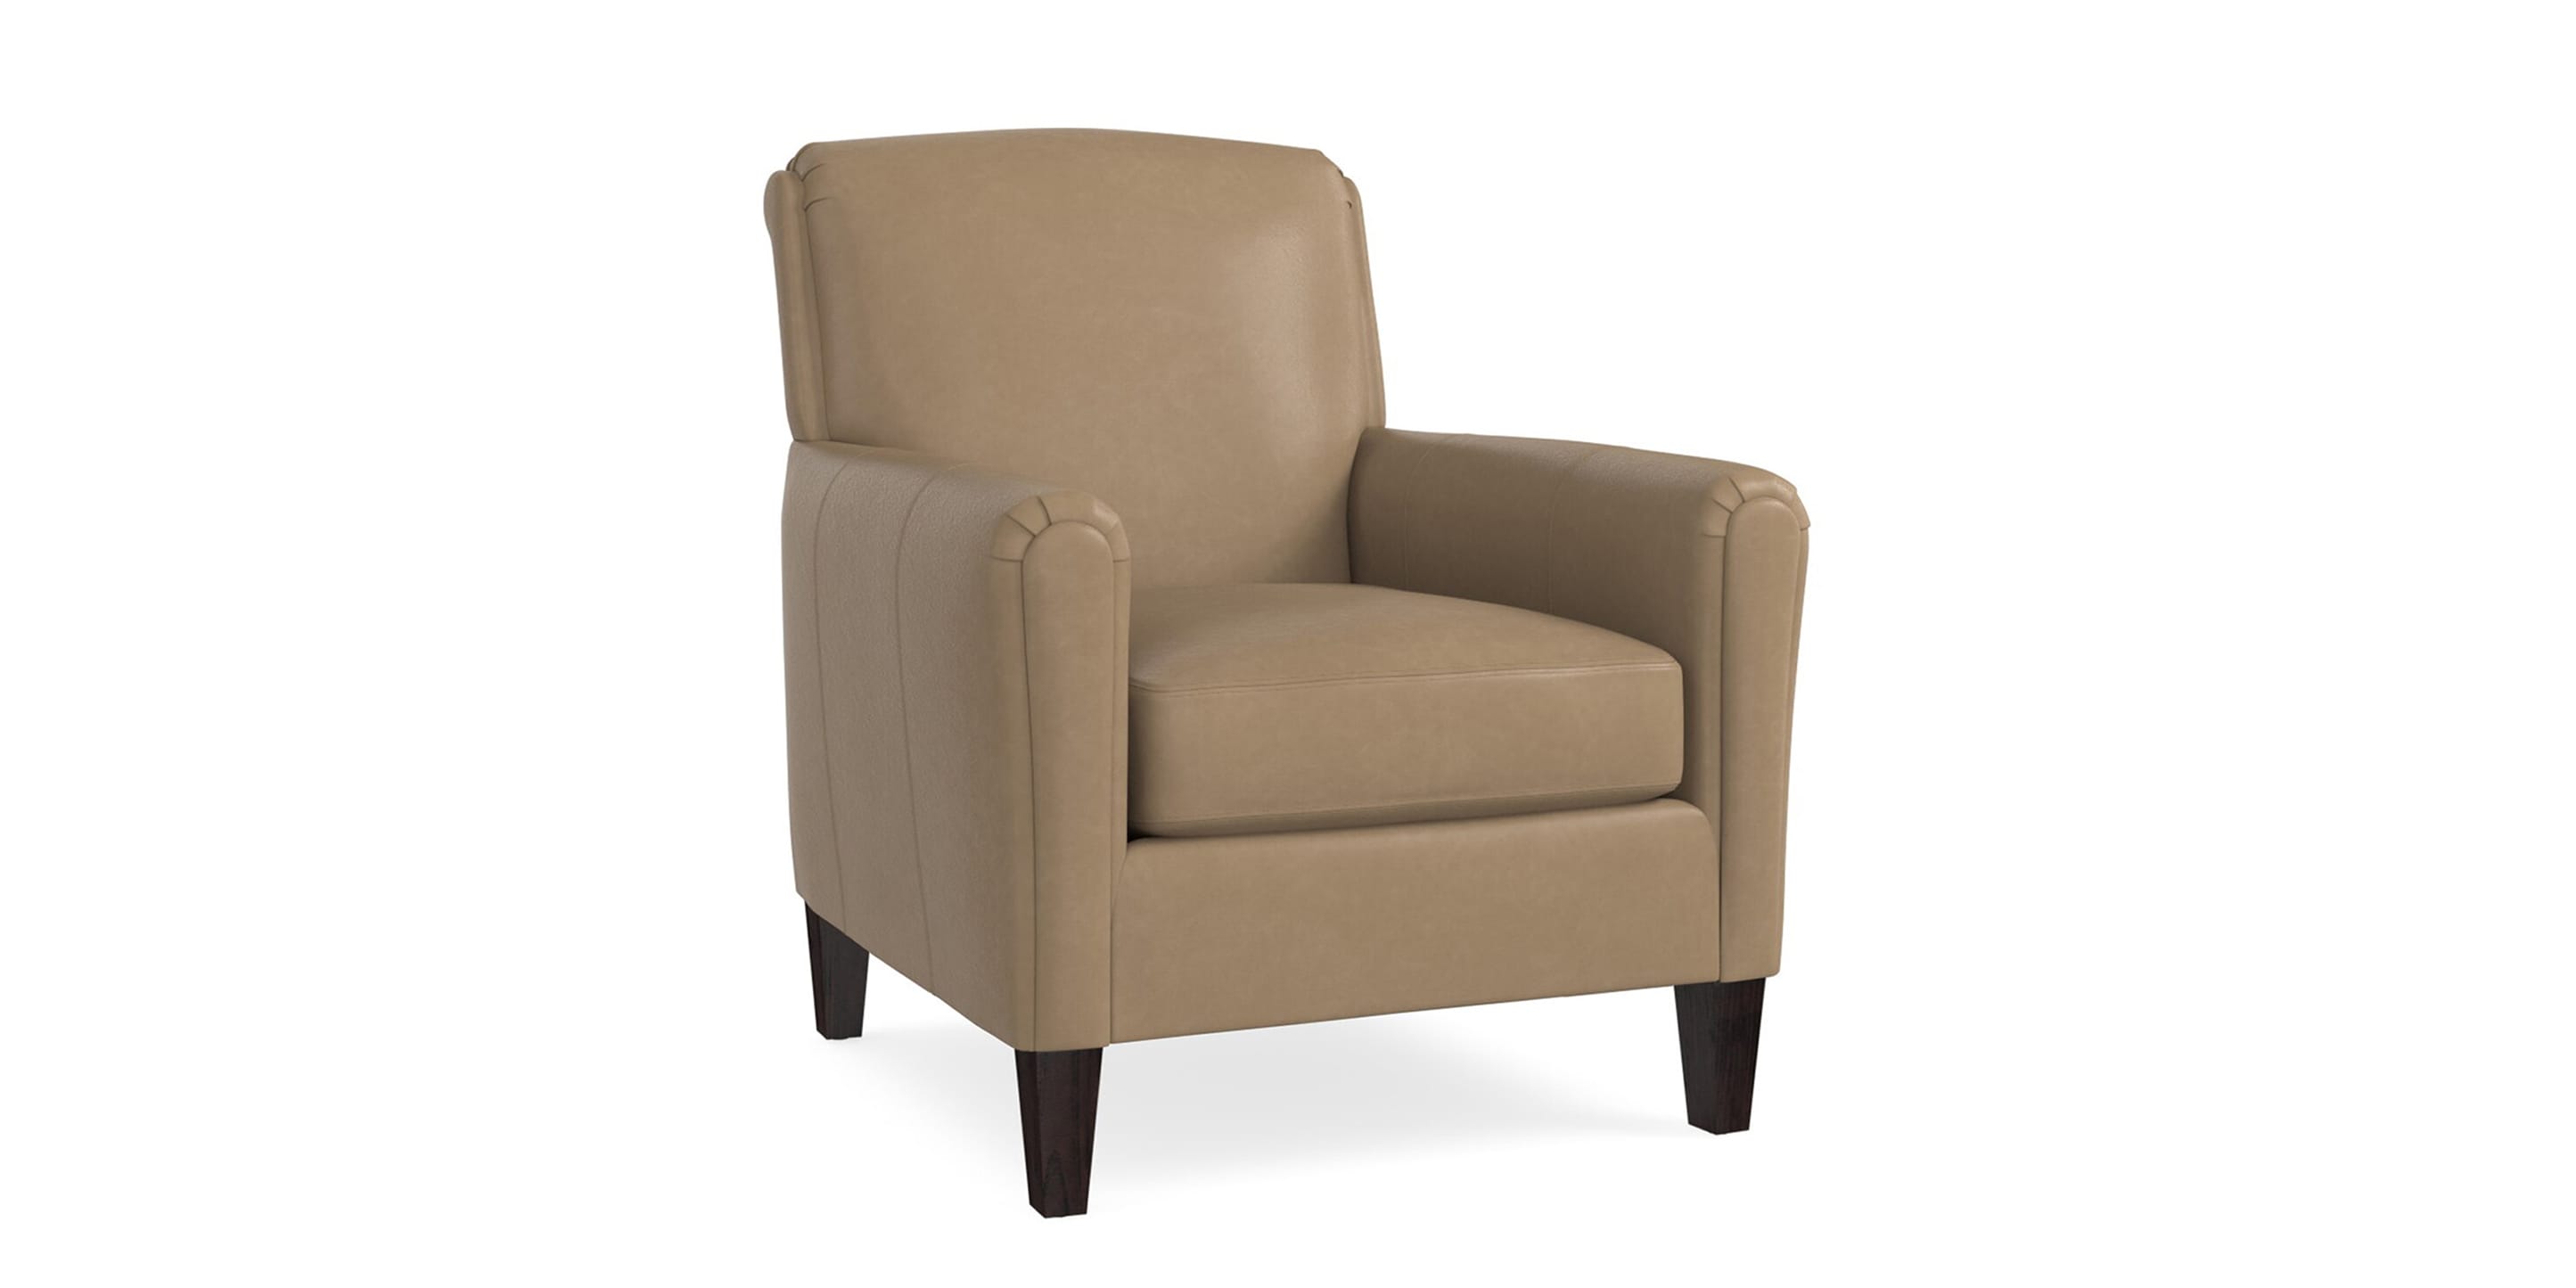 Ridgebury Leather Accent Chair